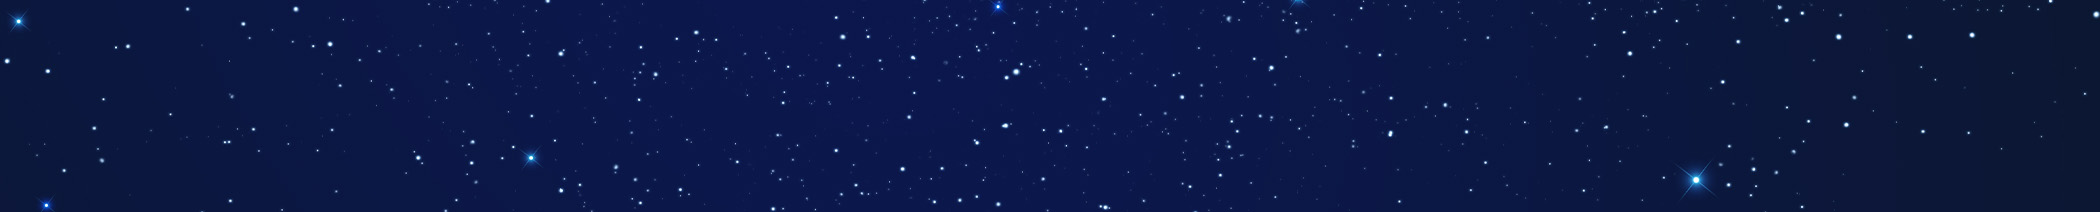 Stars at night